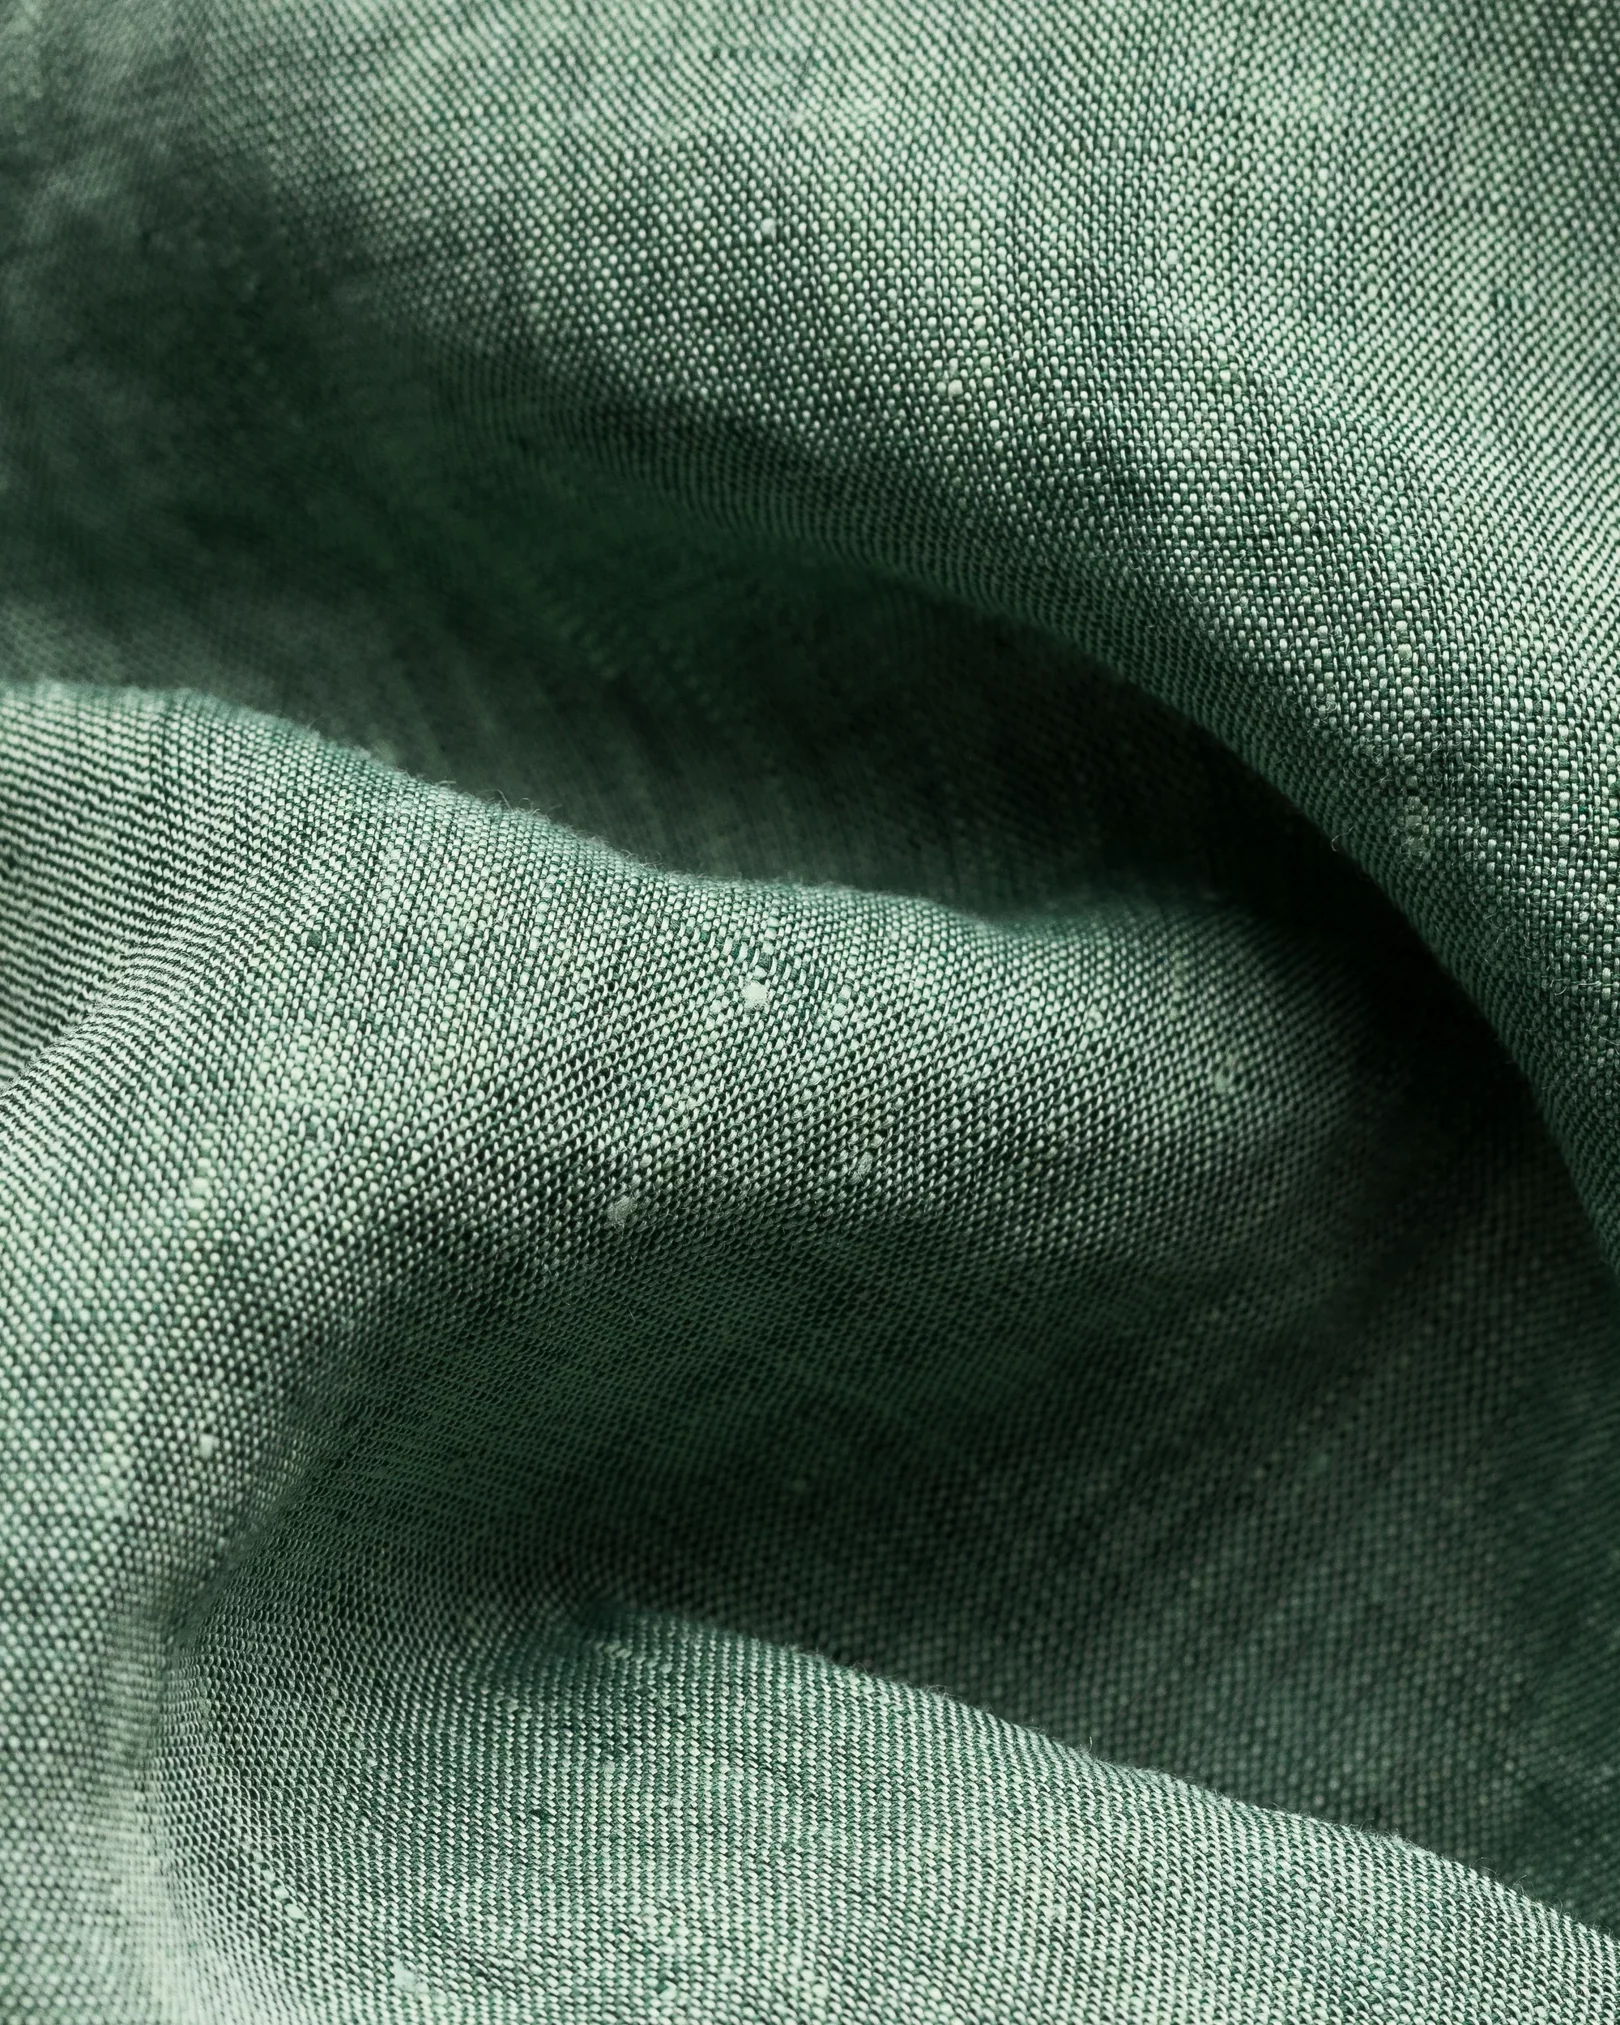 Eton - dark green linen polo shirt short sleeve